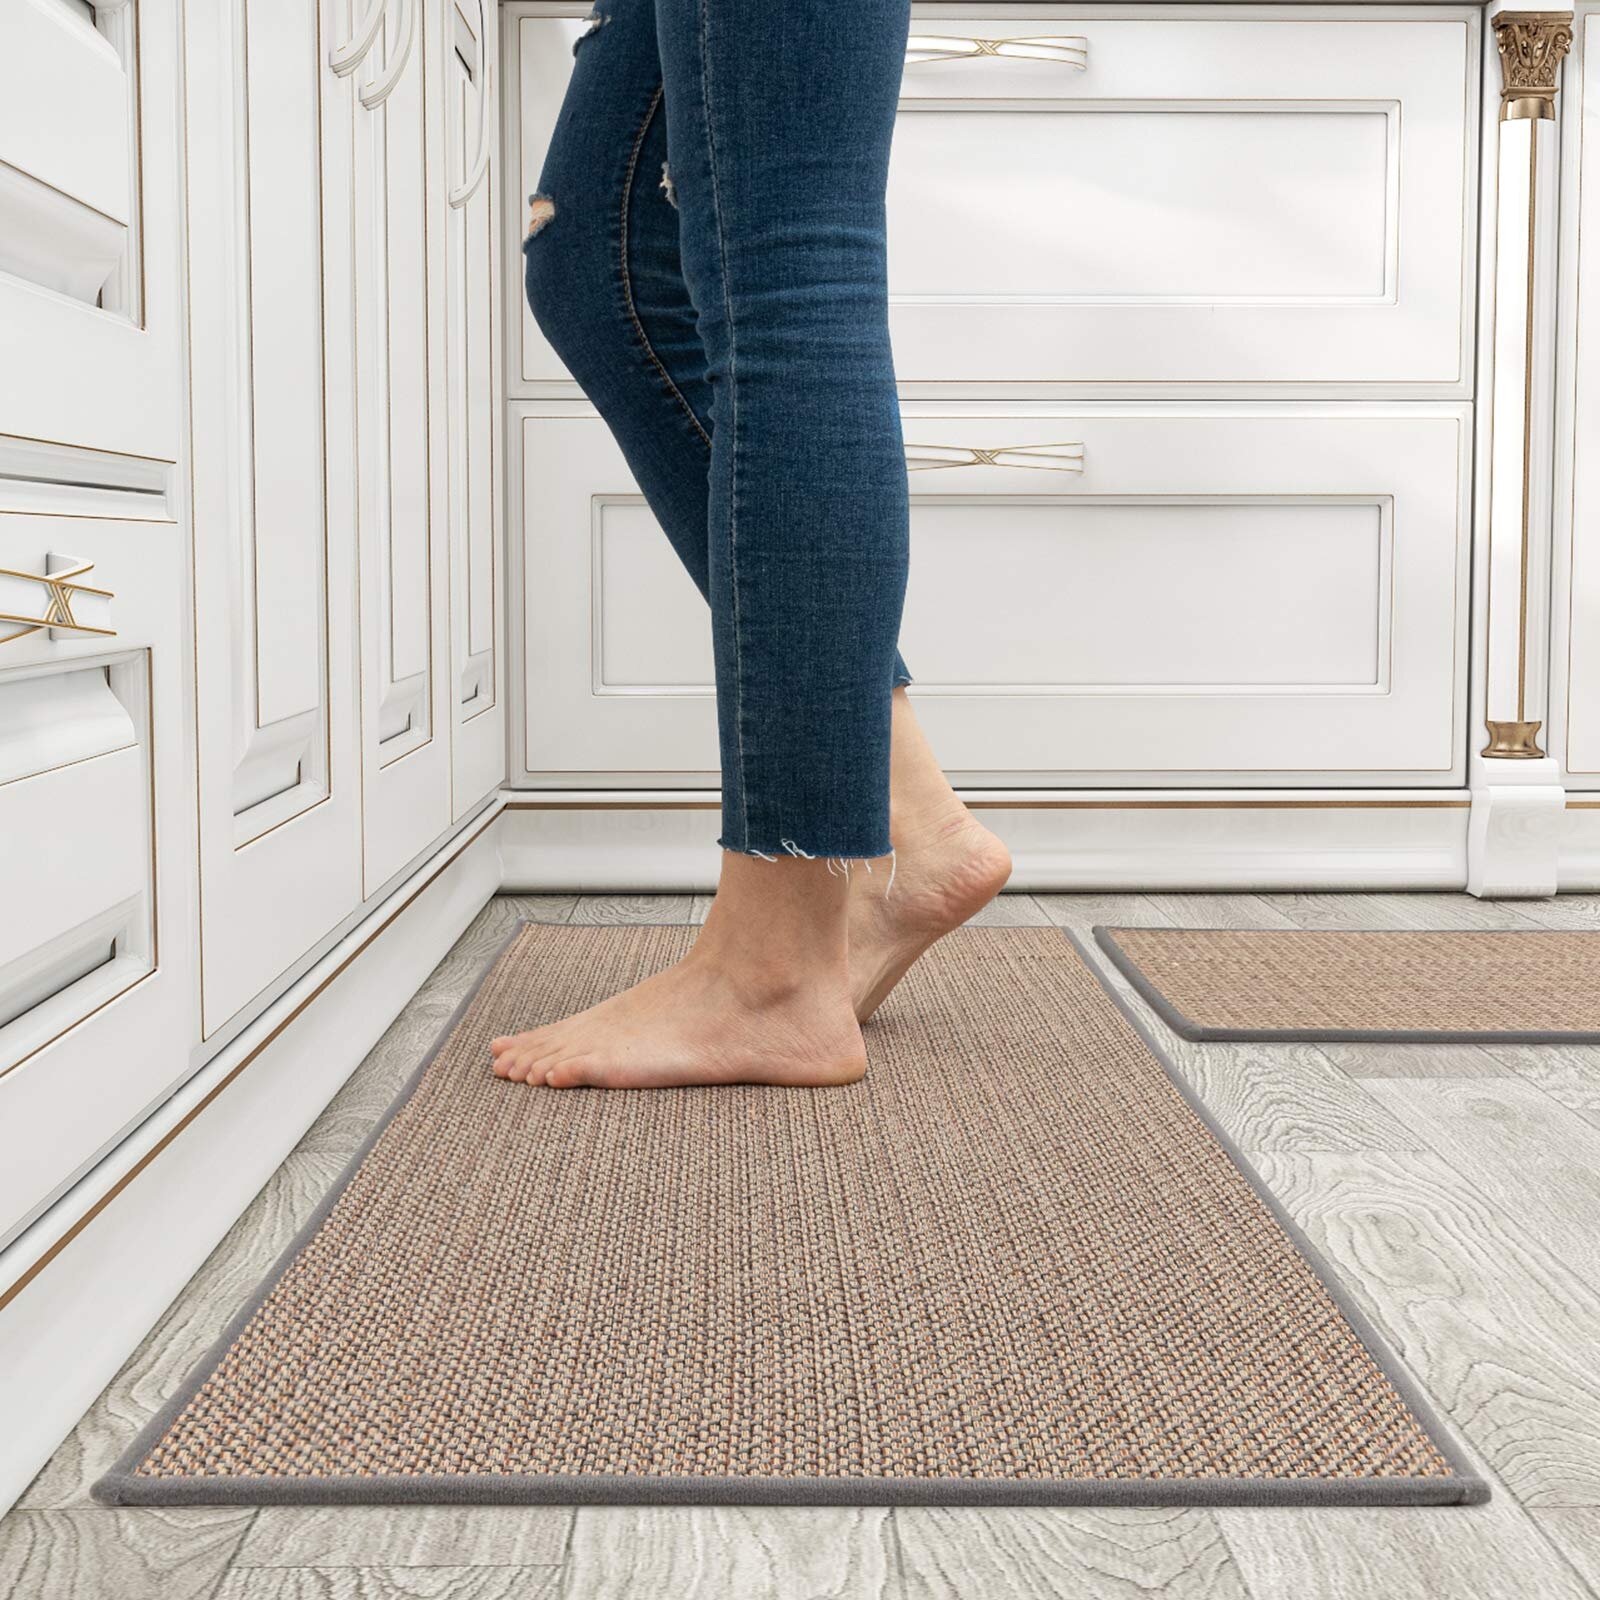 All Purpose Non-Slip Indoor Runner Mat for bathroom kitchen hallway